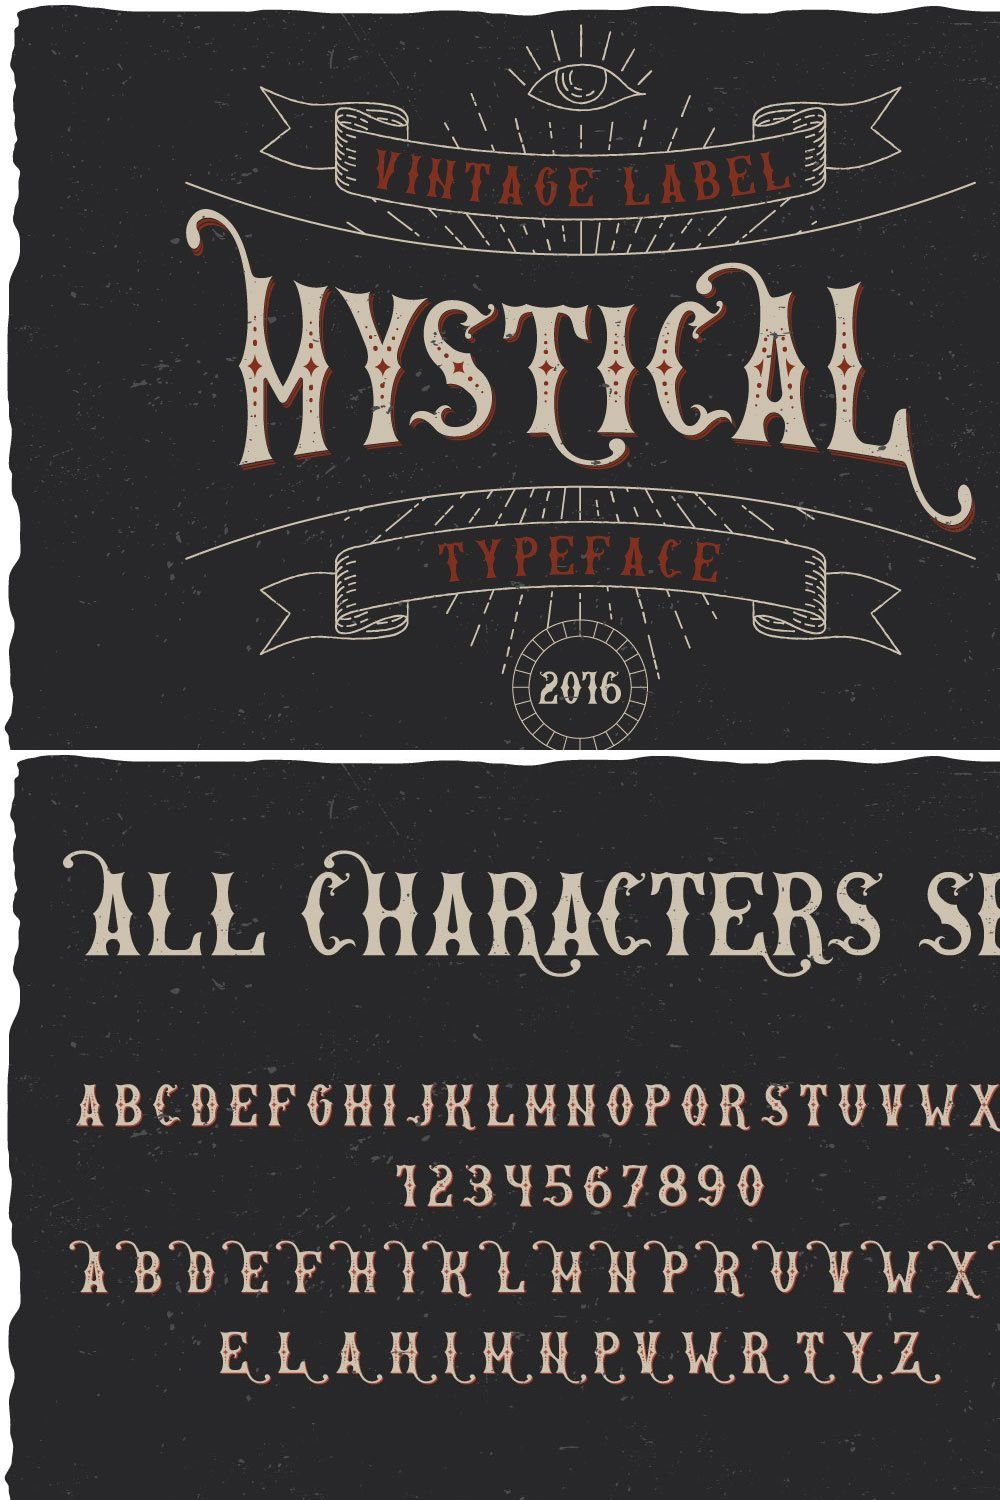 Mystic Label Typeface pinterest preview image.